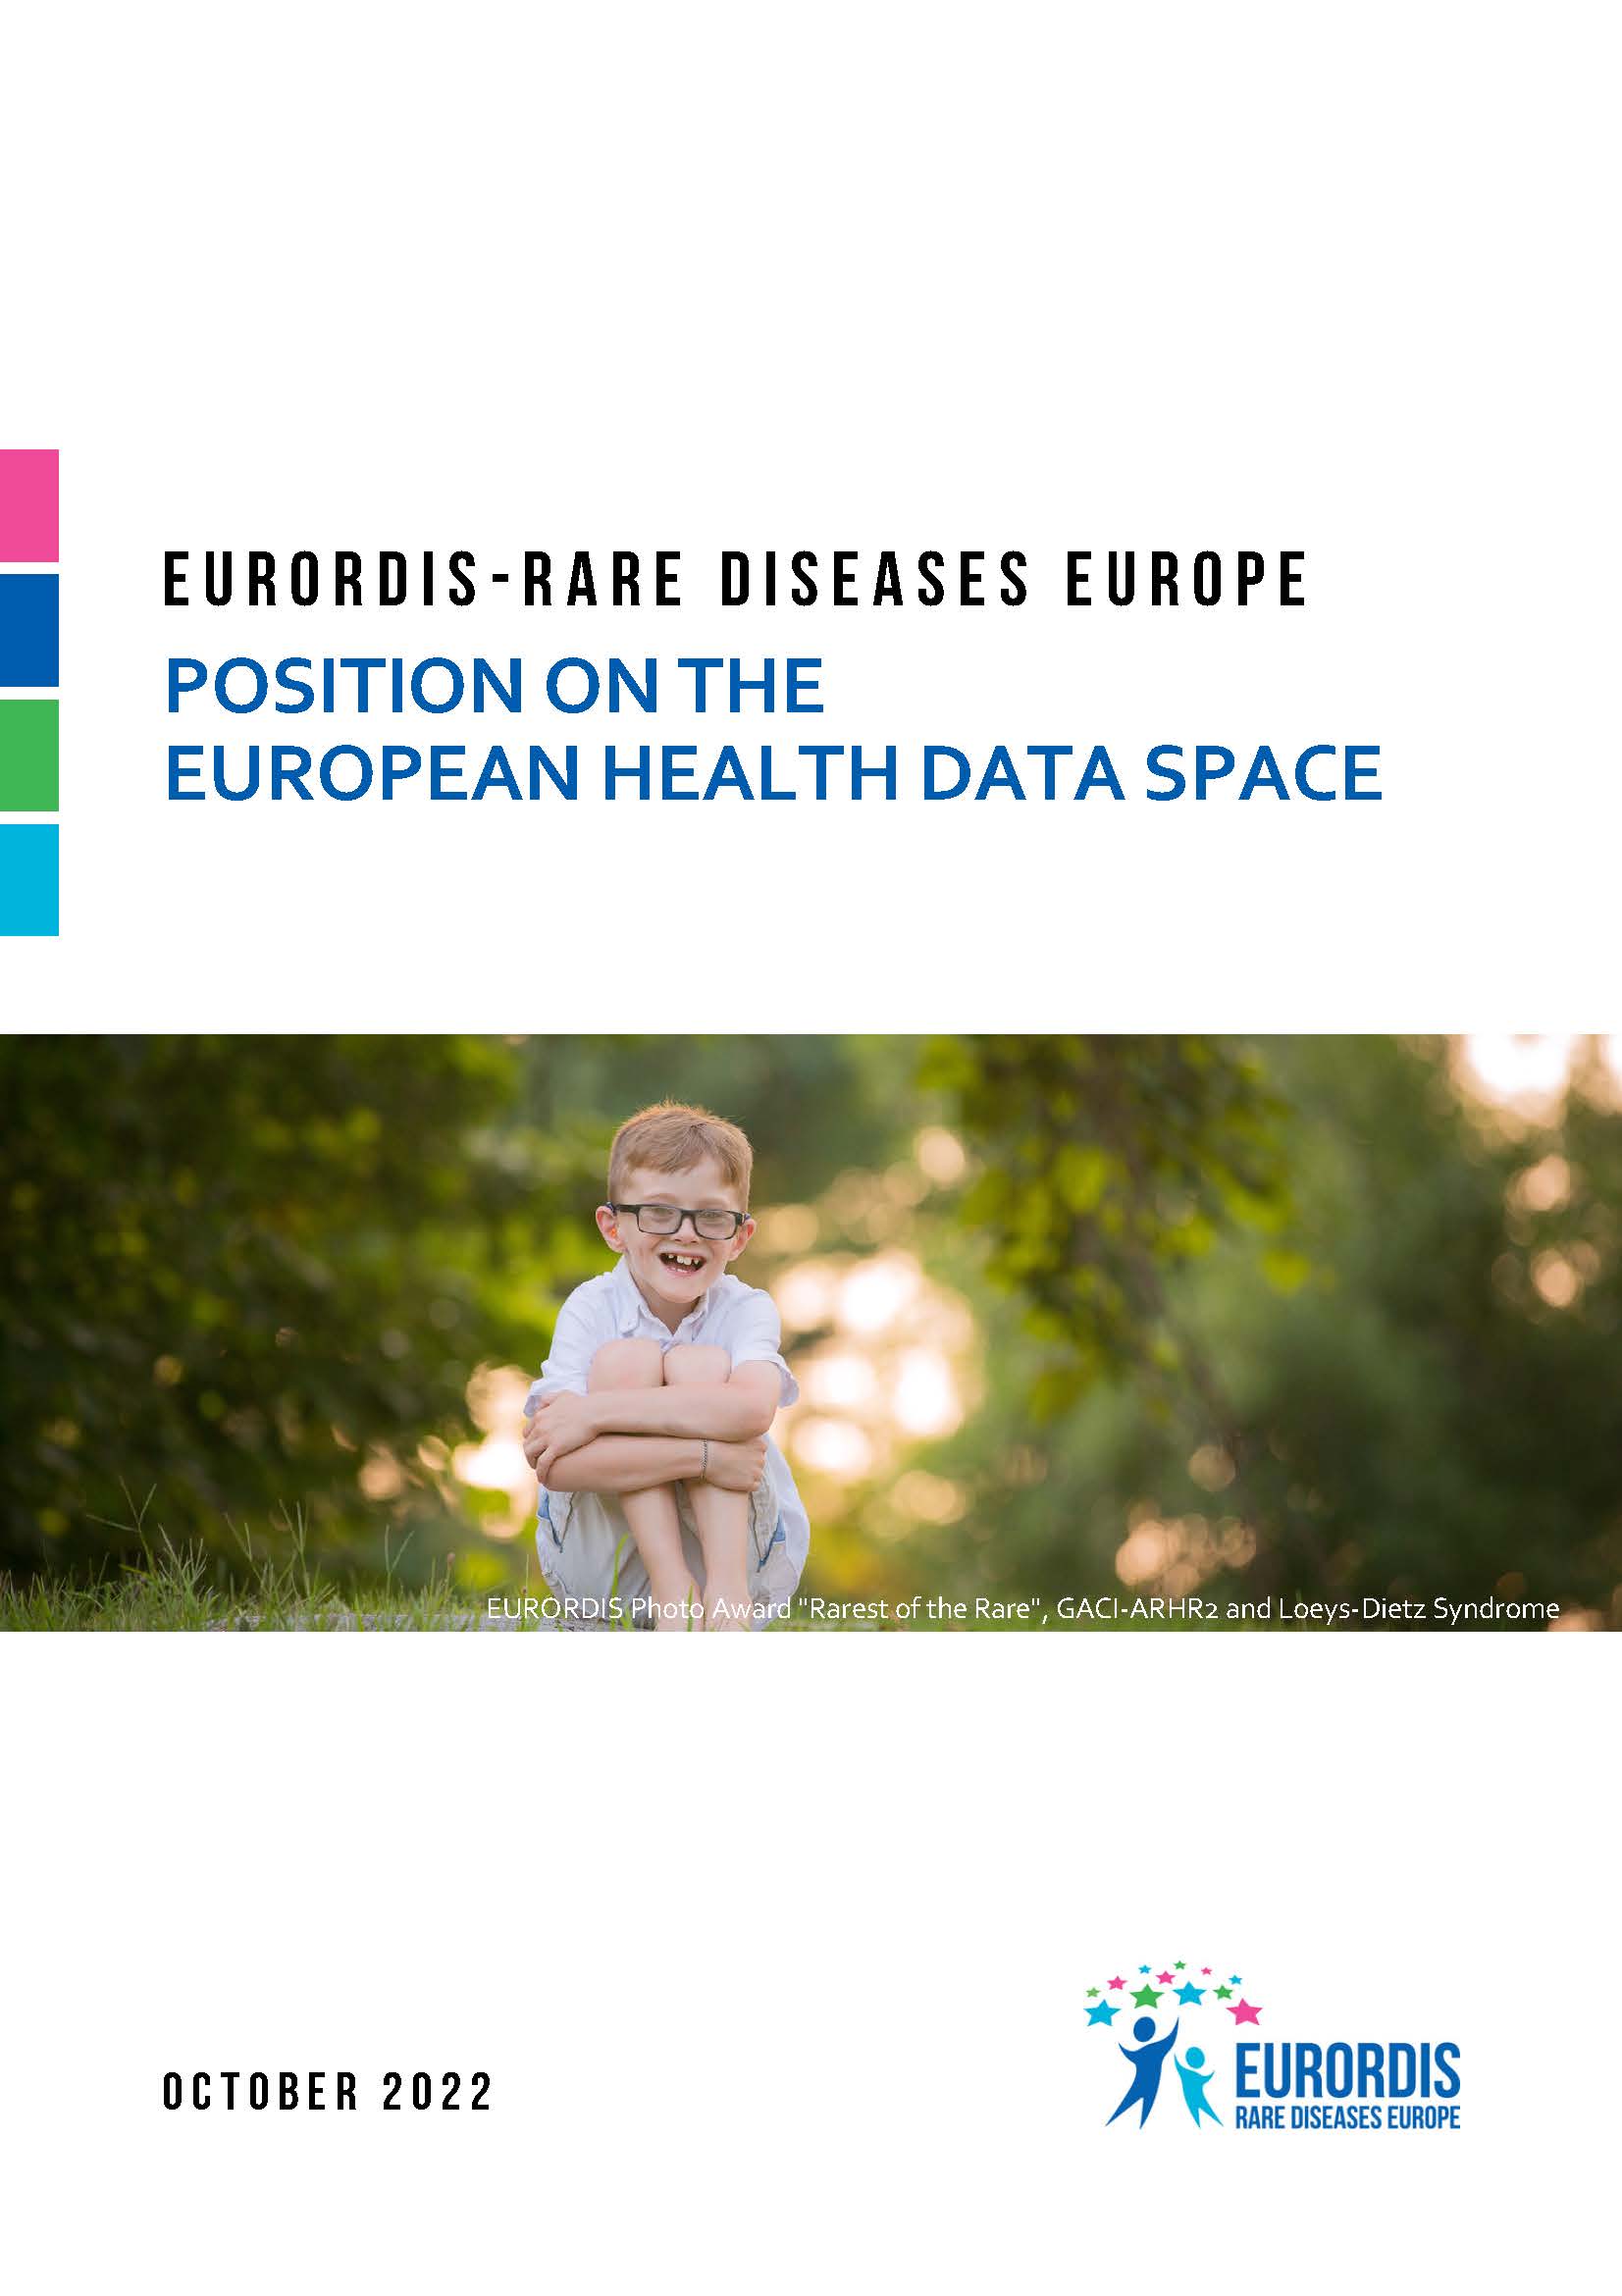 EURORDIS’ Position on the European Health Data Space